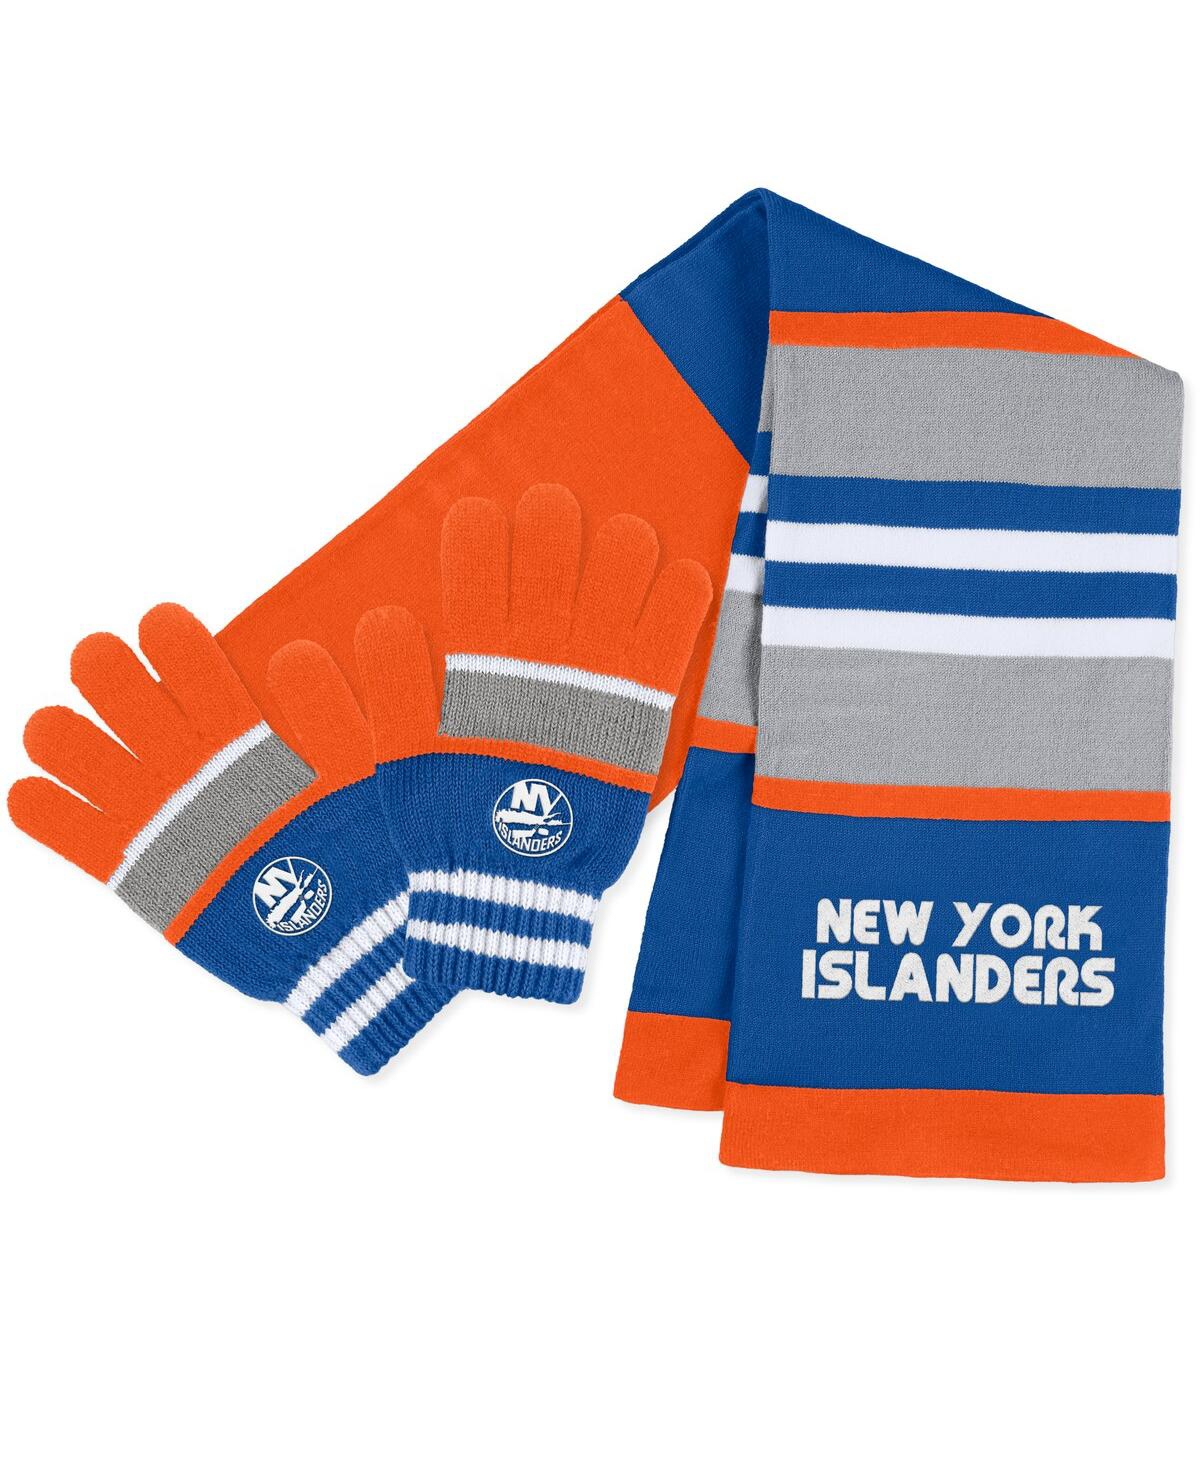 Wear By Erin Andrews Women's  New York Islanders Stripe Glove And Scarf Set In Multi